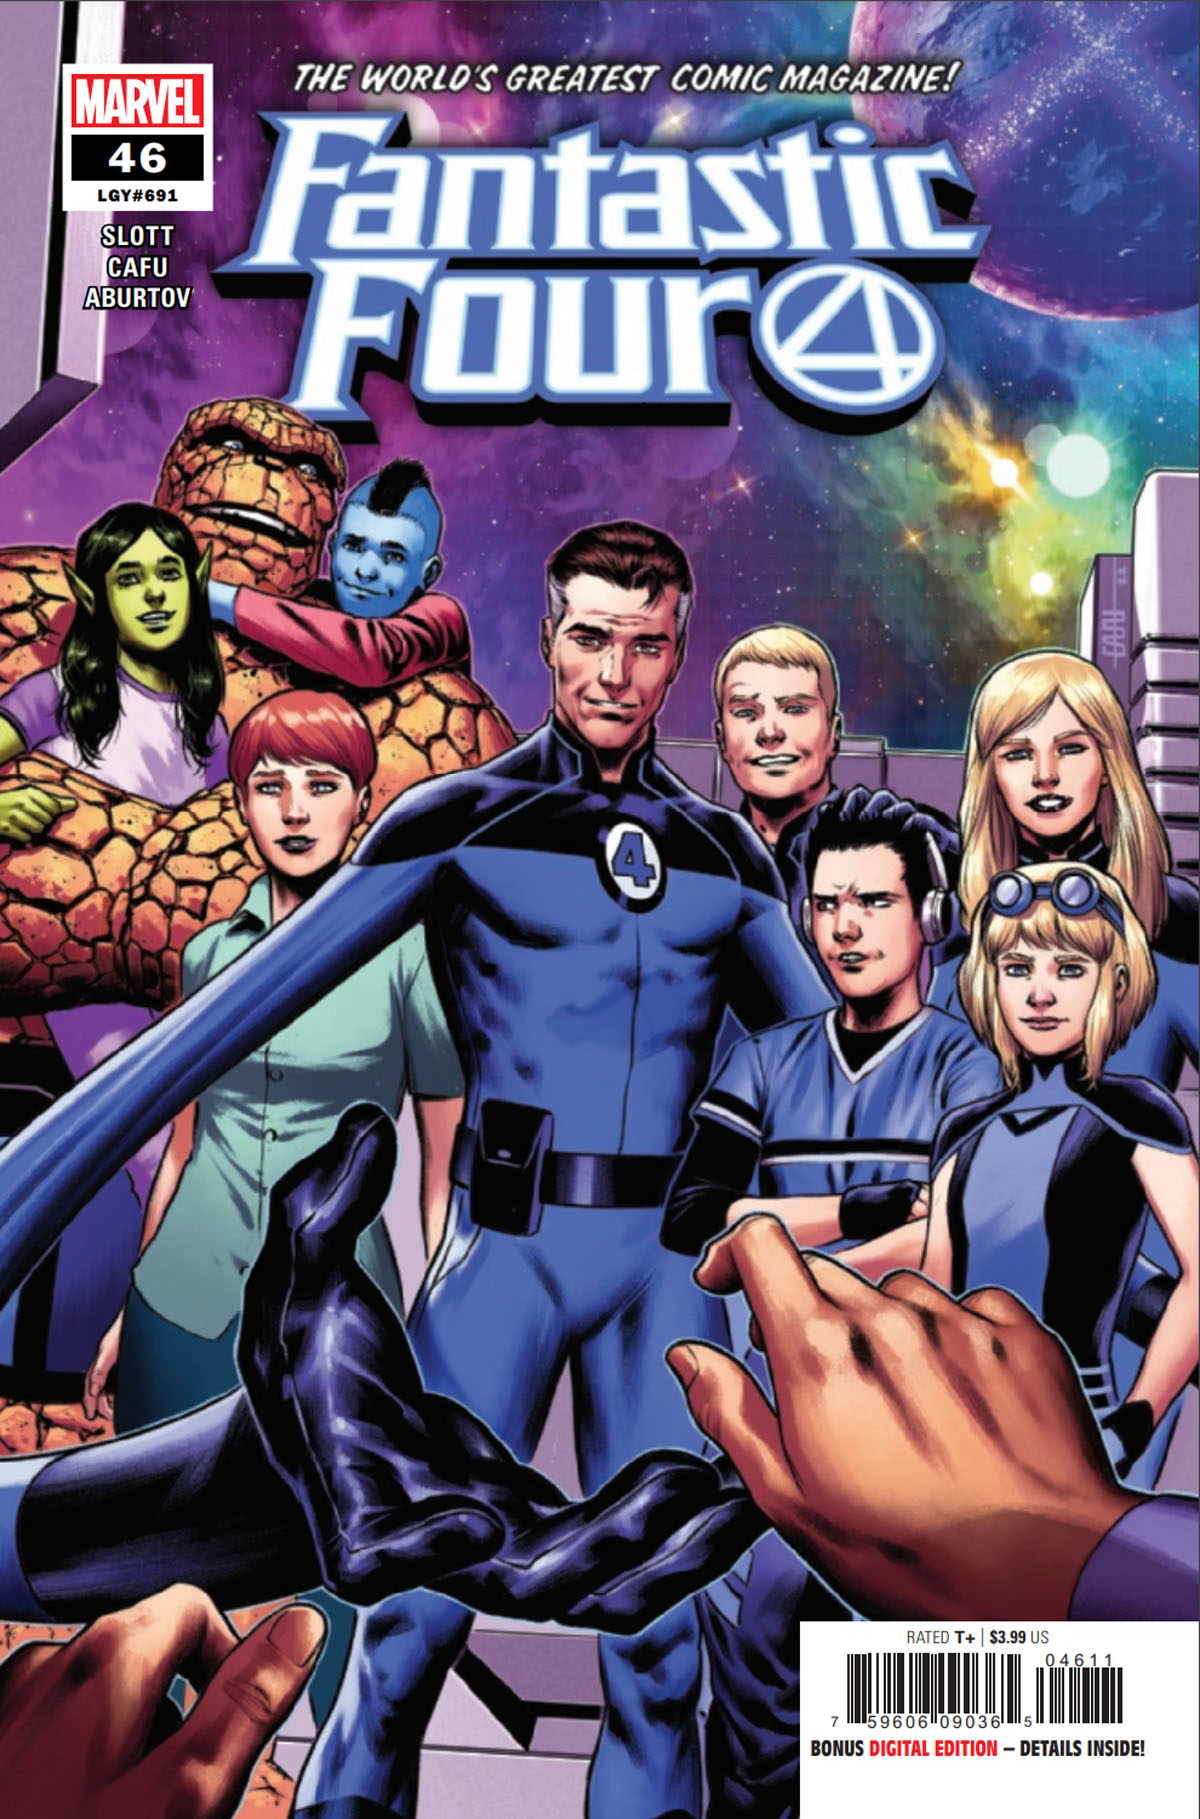 Fantastic Four #46 cover